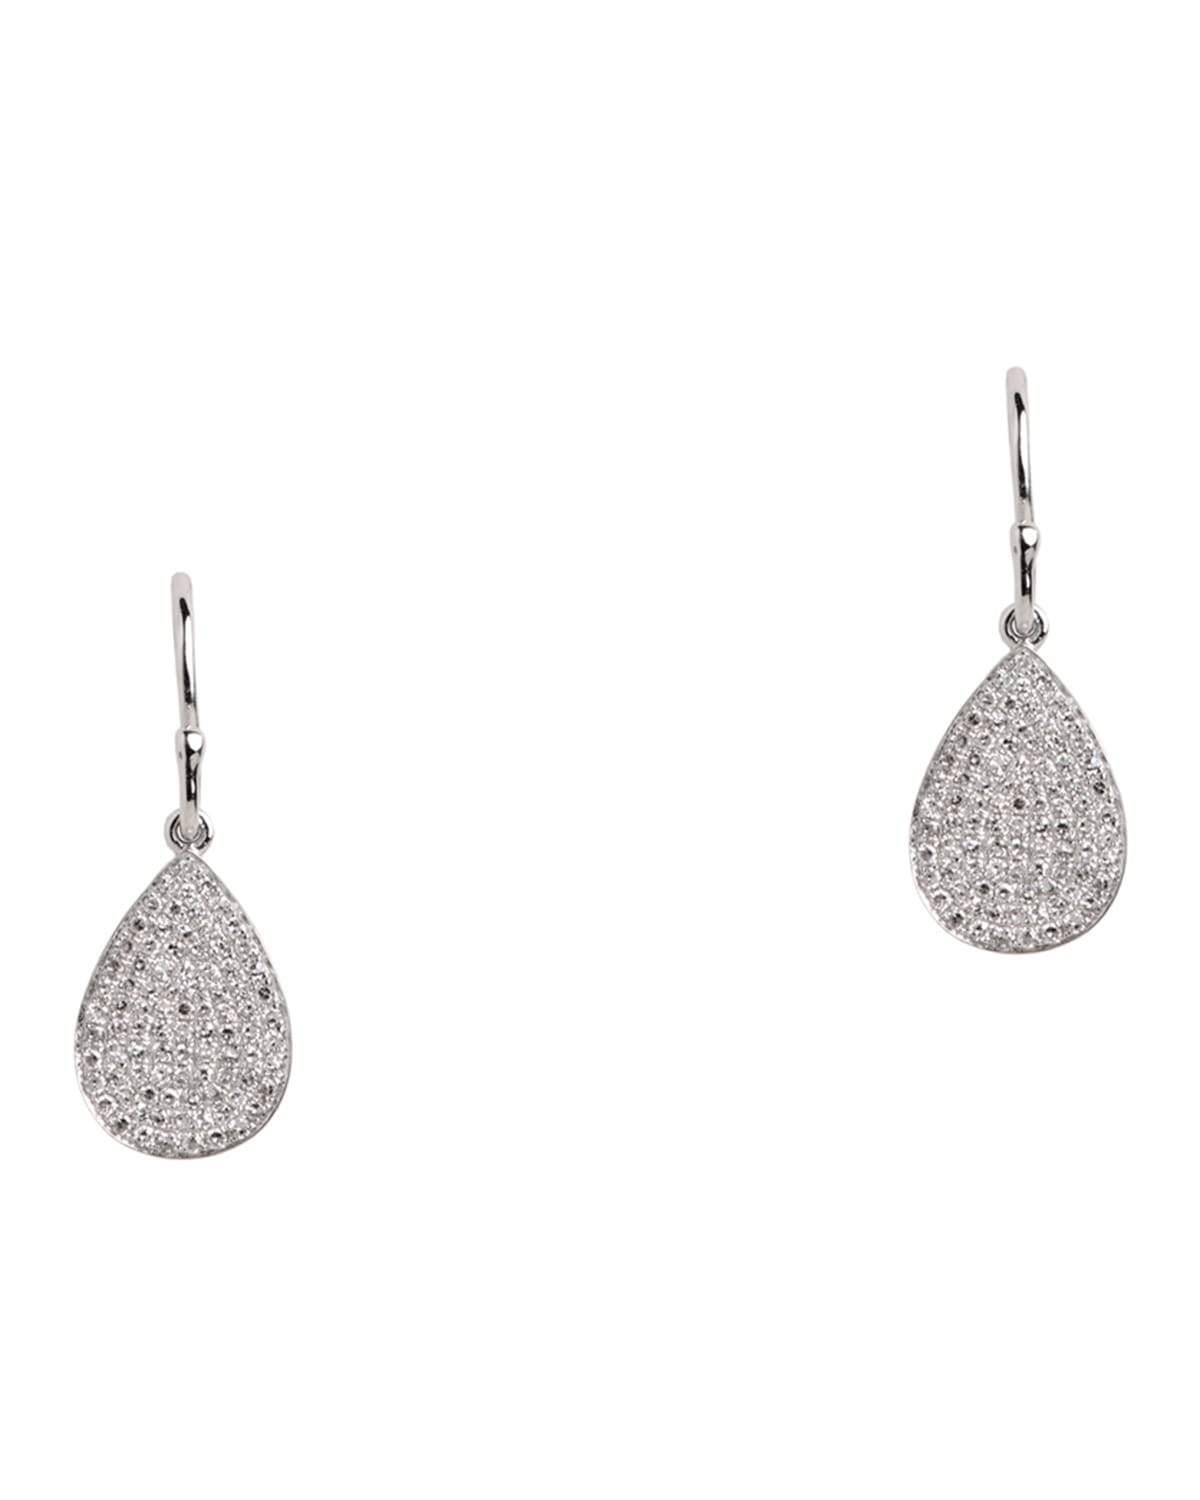 Bridget King Jewelry Mini Pave Diamond Teardrop Earrings